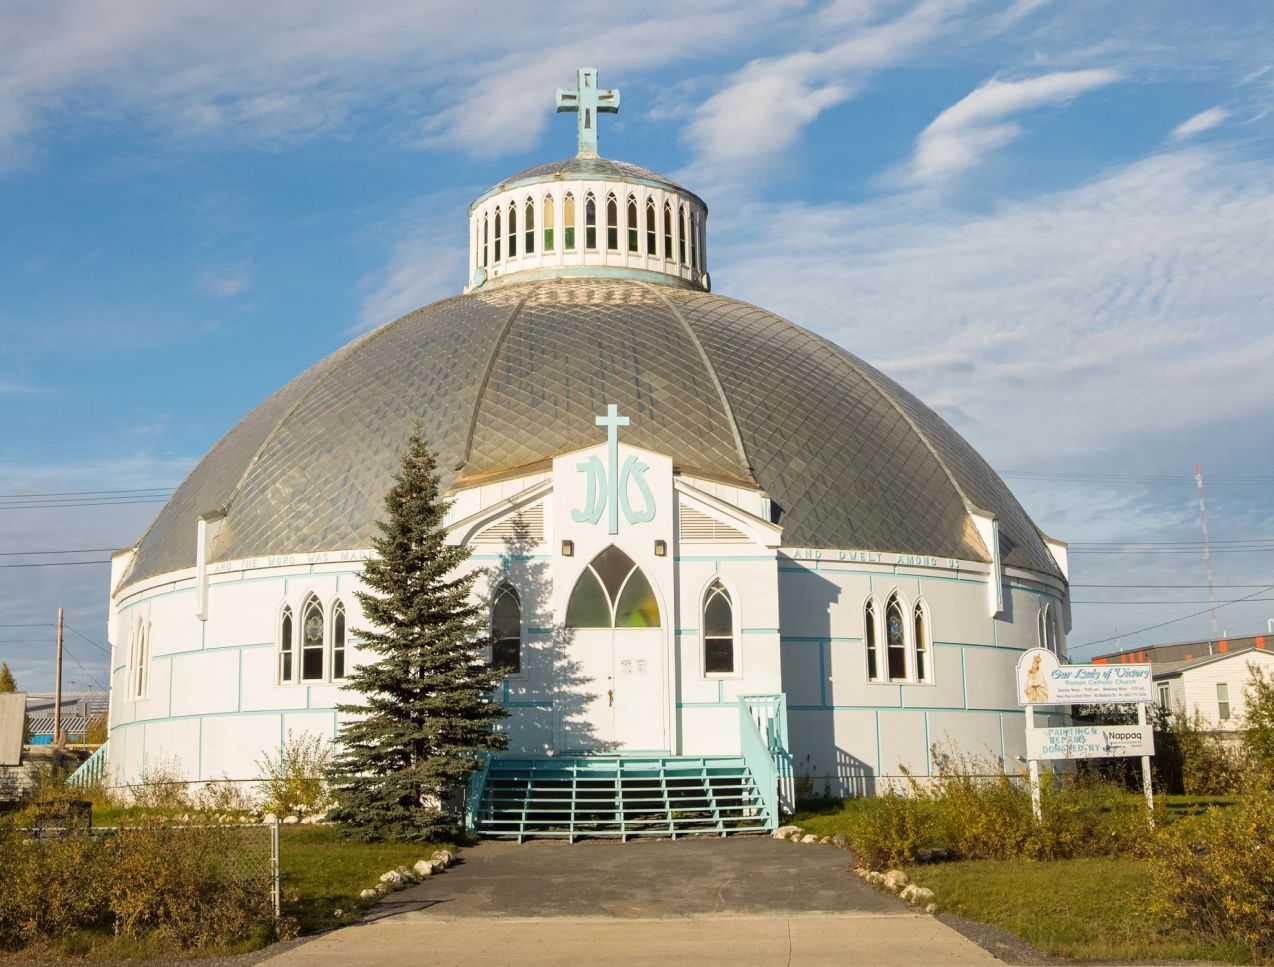 Die Kirche "Our Lady Of Victory Church" in Inuvik hat die Form eines Iglus